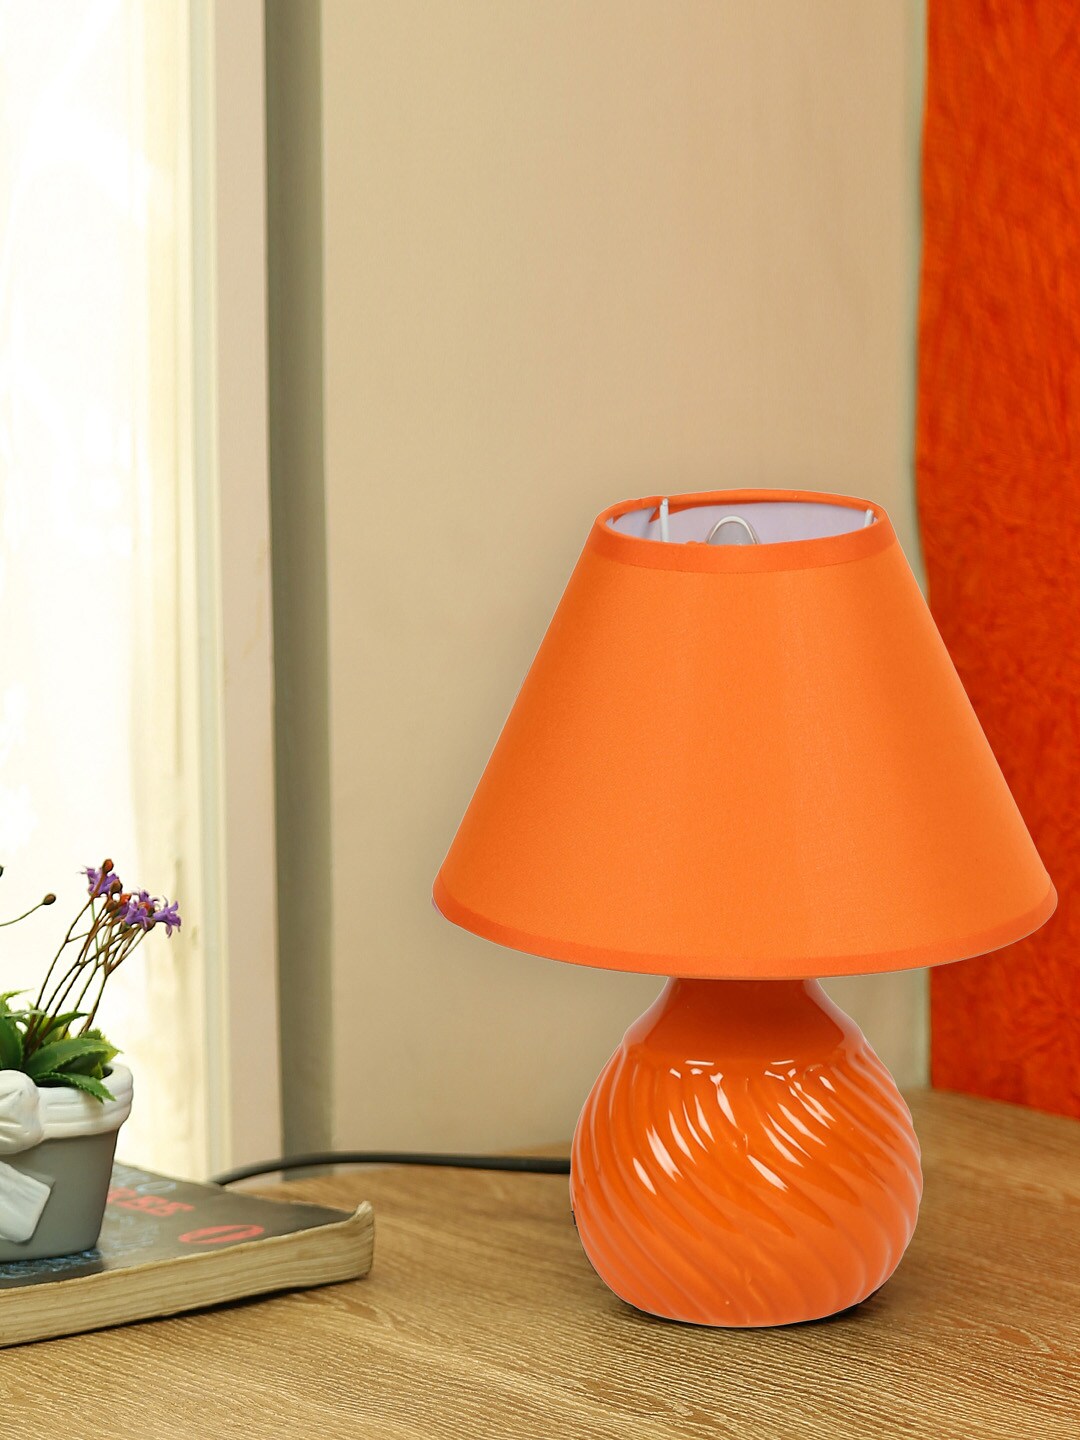 Aapno Rajasthan Orange Ceramic Table Lamp With Shade Price in India